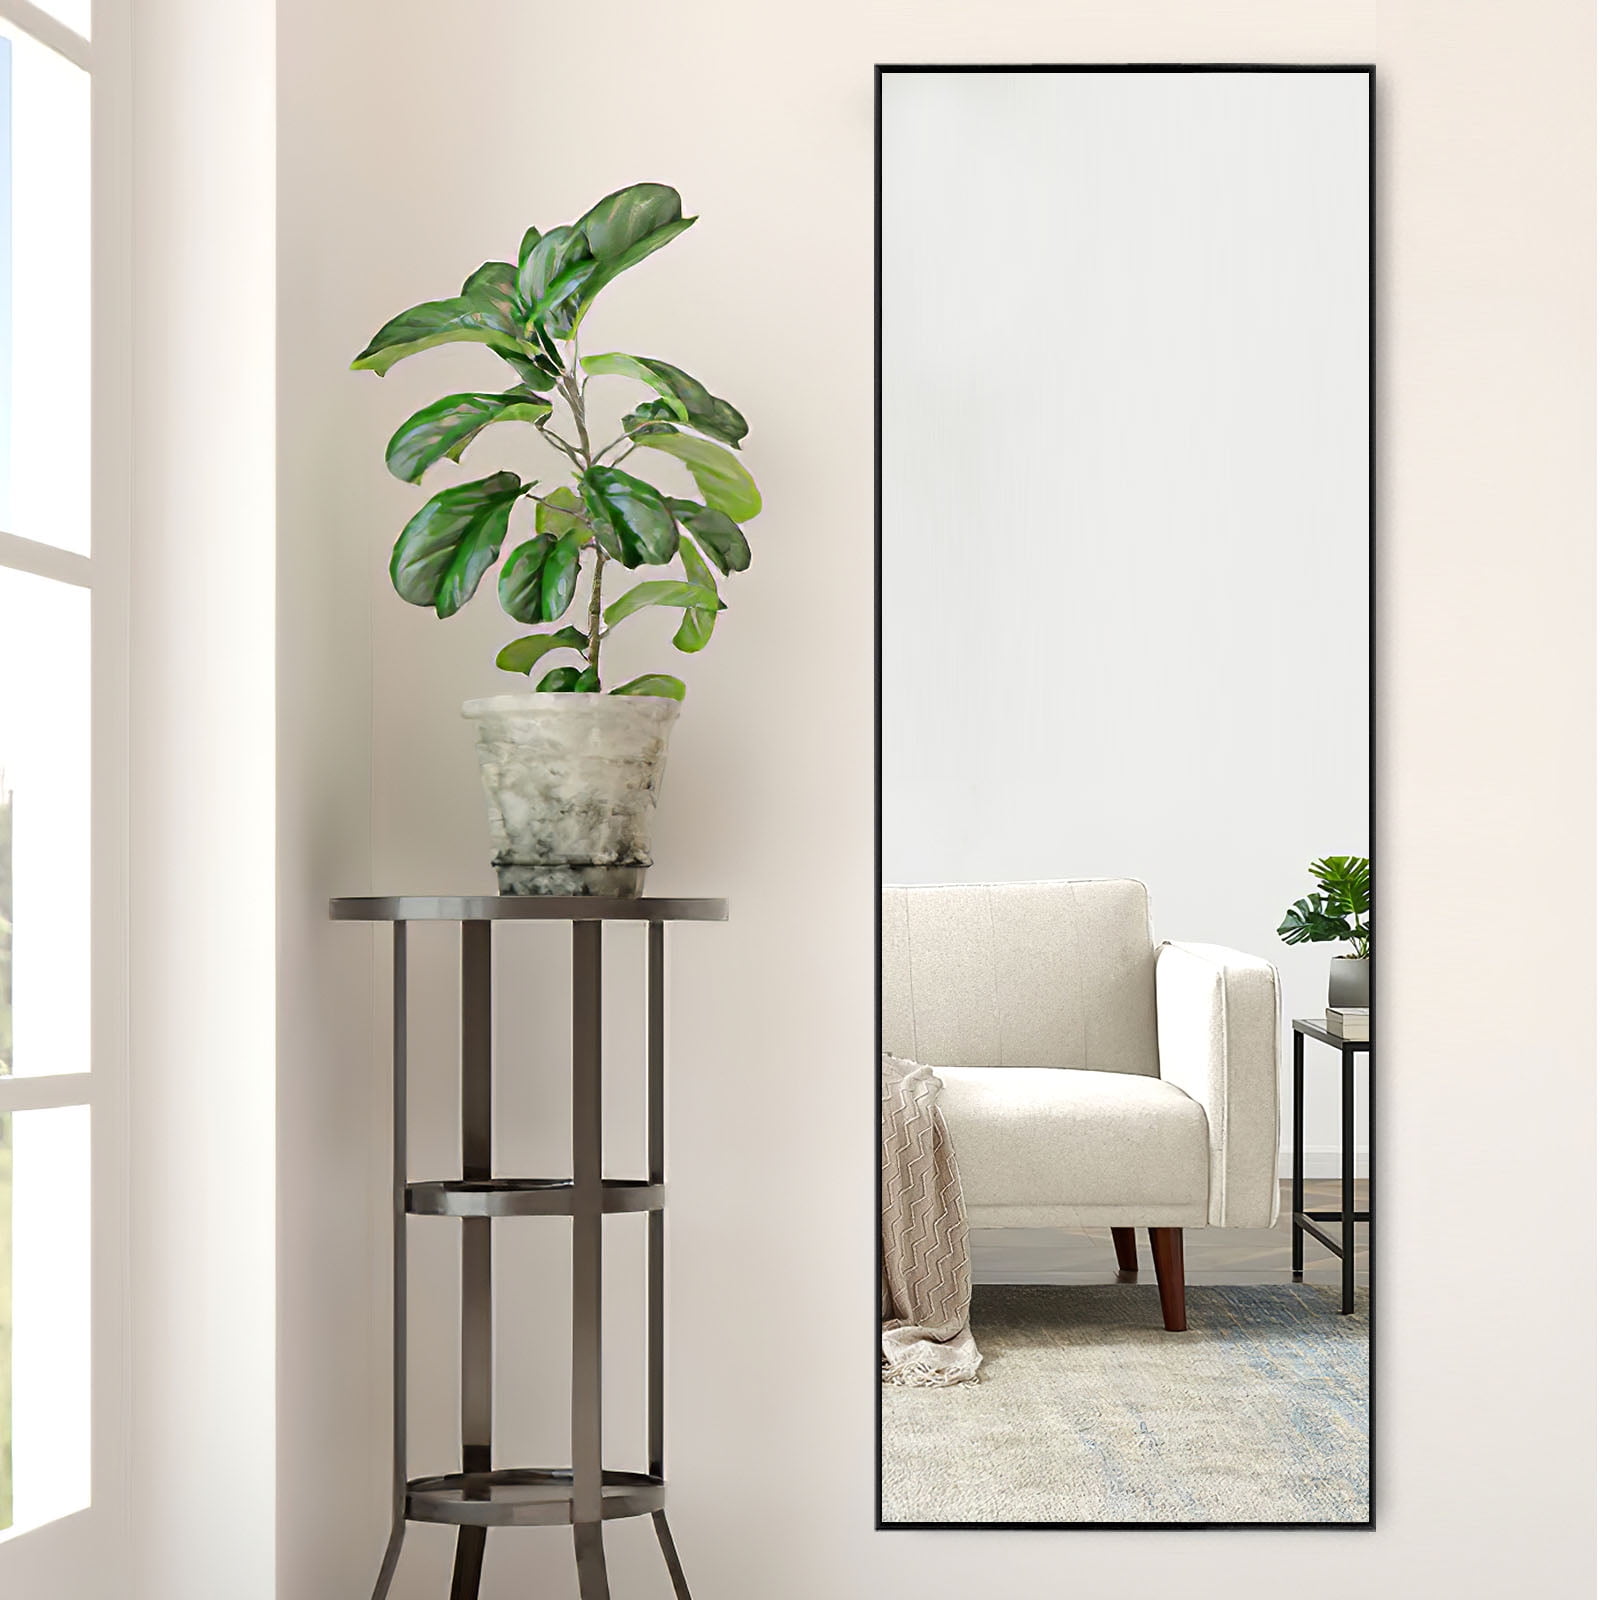 NeuType 65" x 22" Full Length Mirror Floor Mirror Rectangular Wall